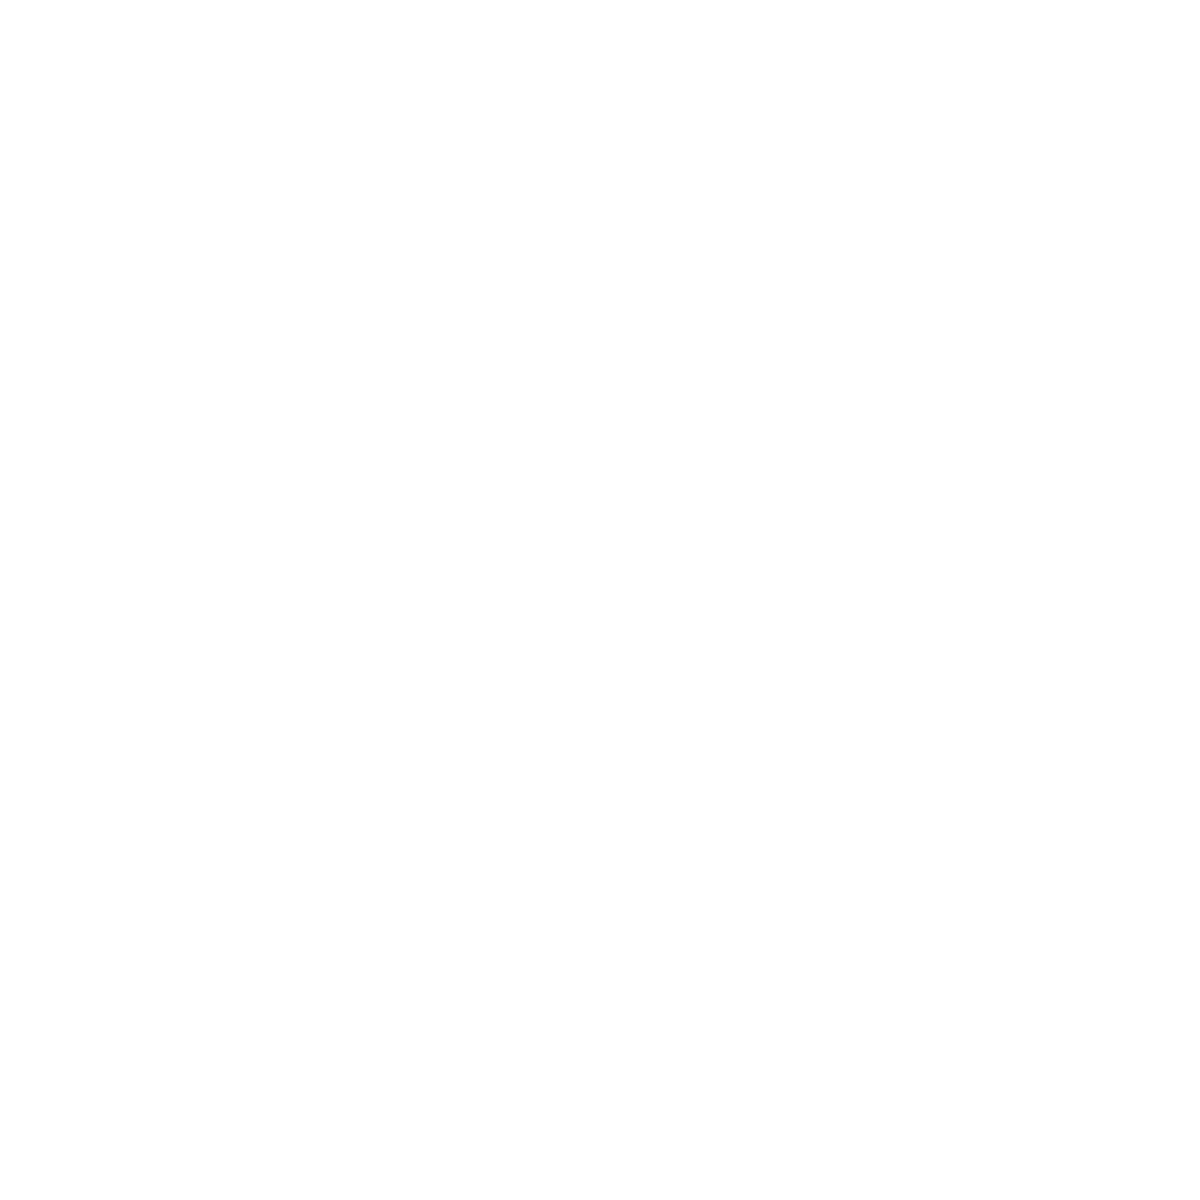 PORTICO - PISOS